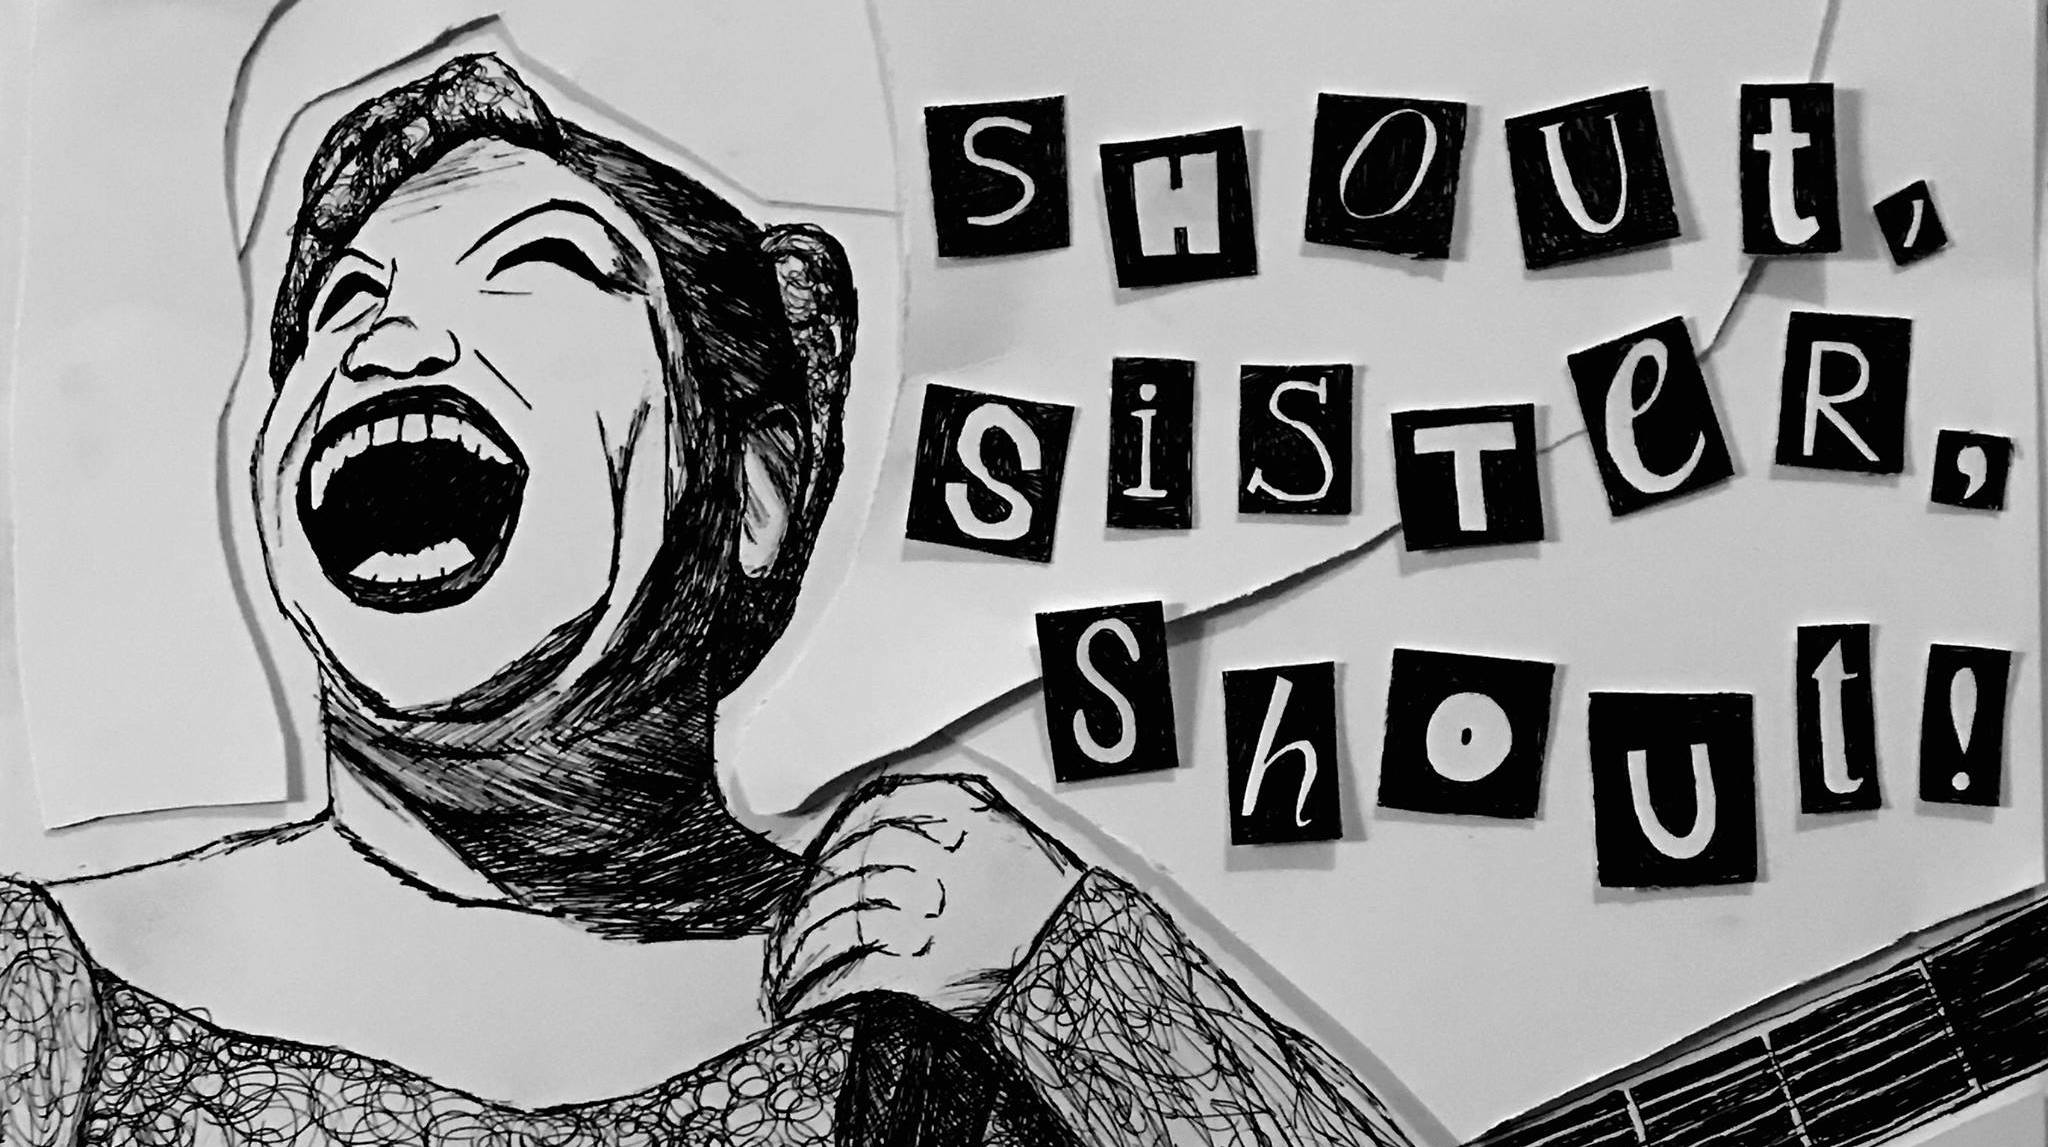 Shout, Sister Shout!